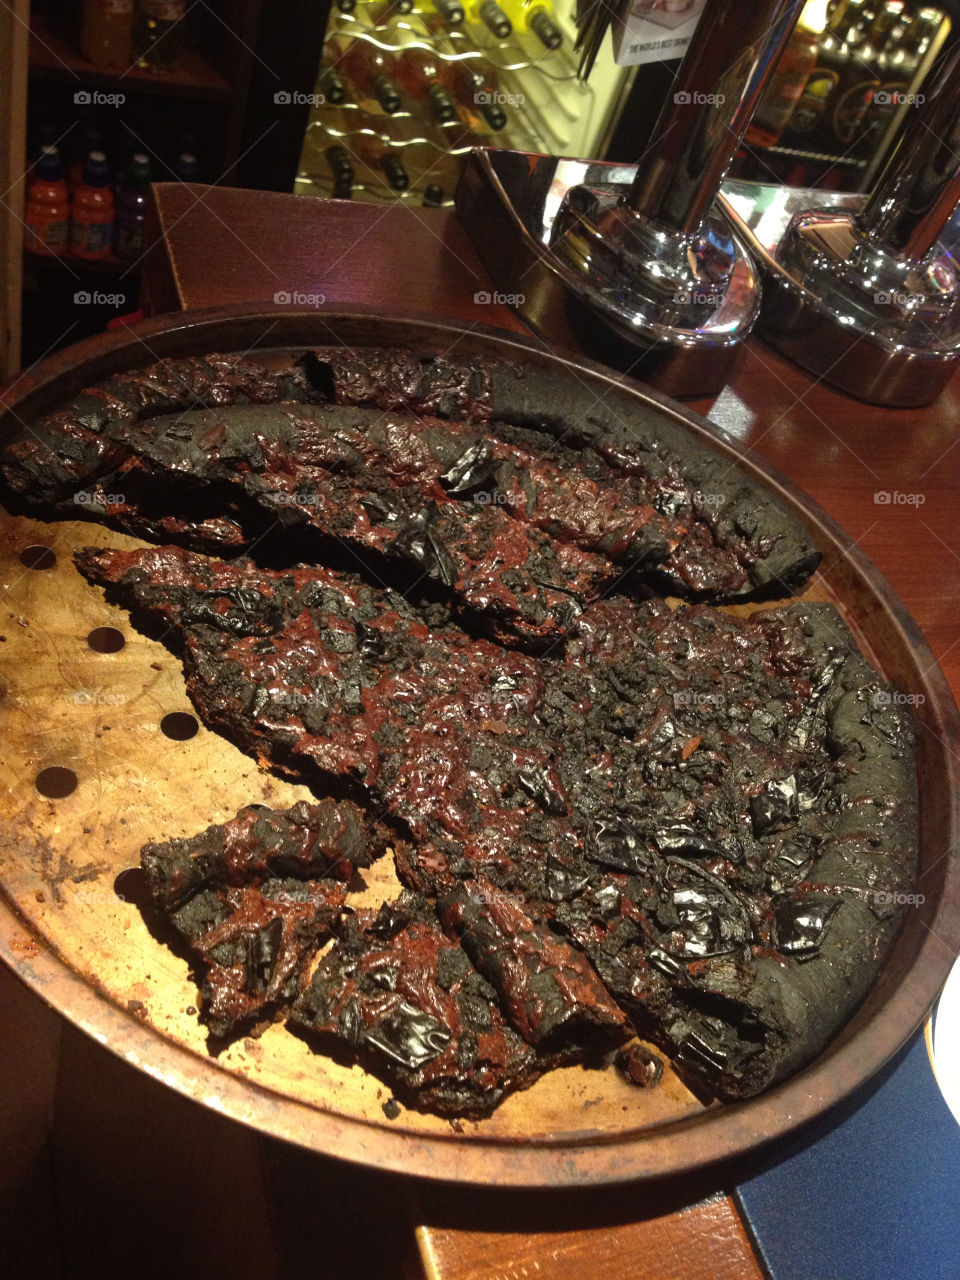 cooking united kingdom pizza burnt by noisydavid